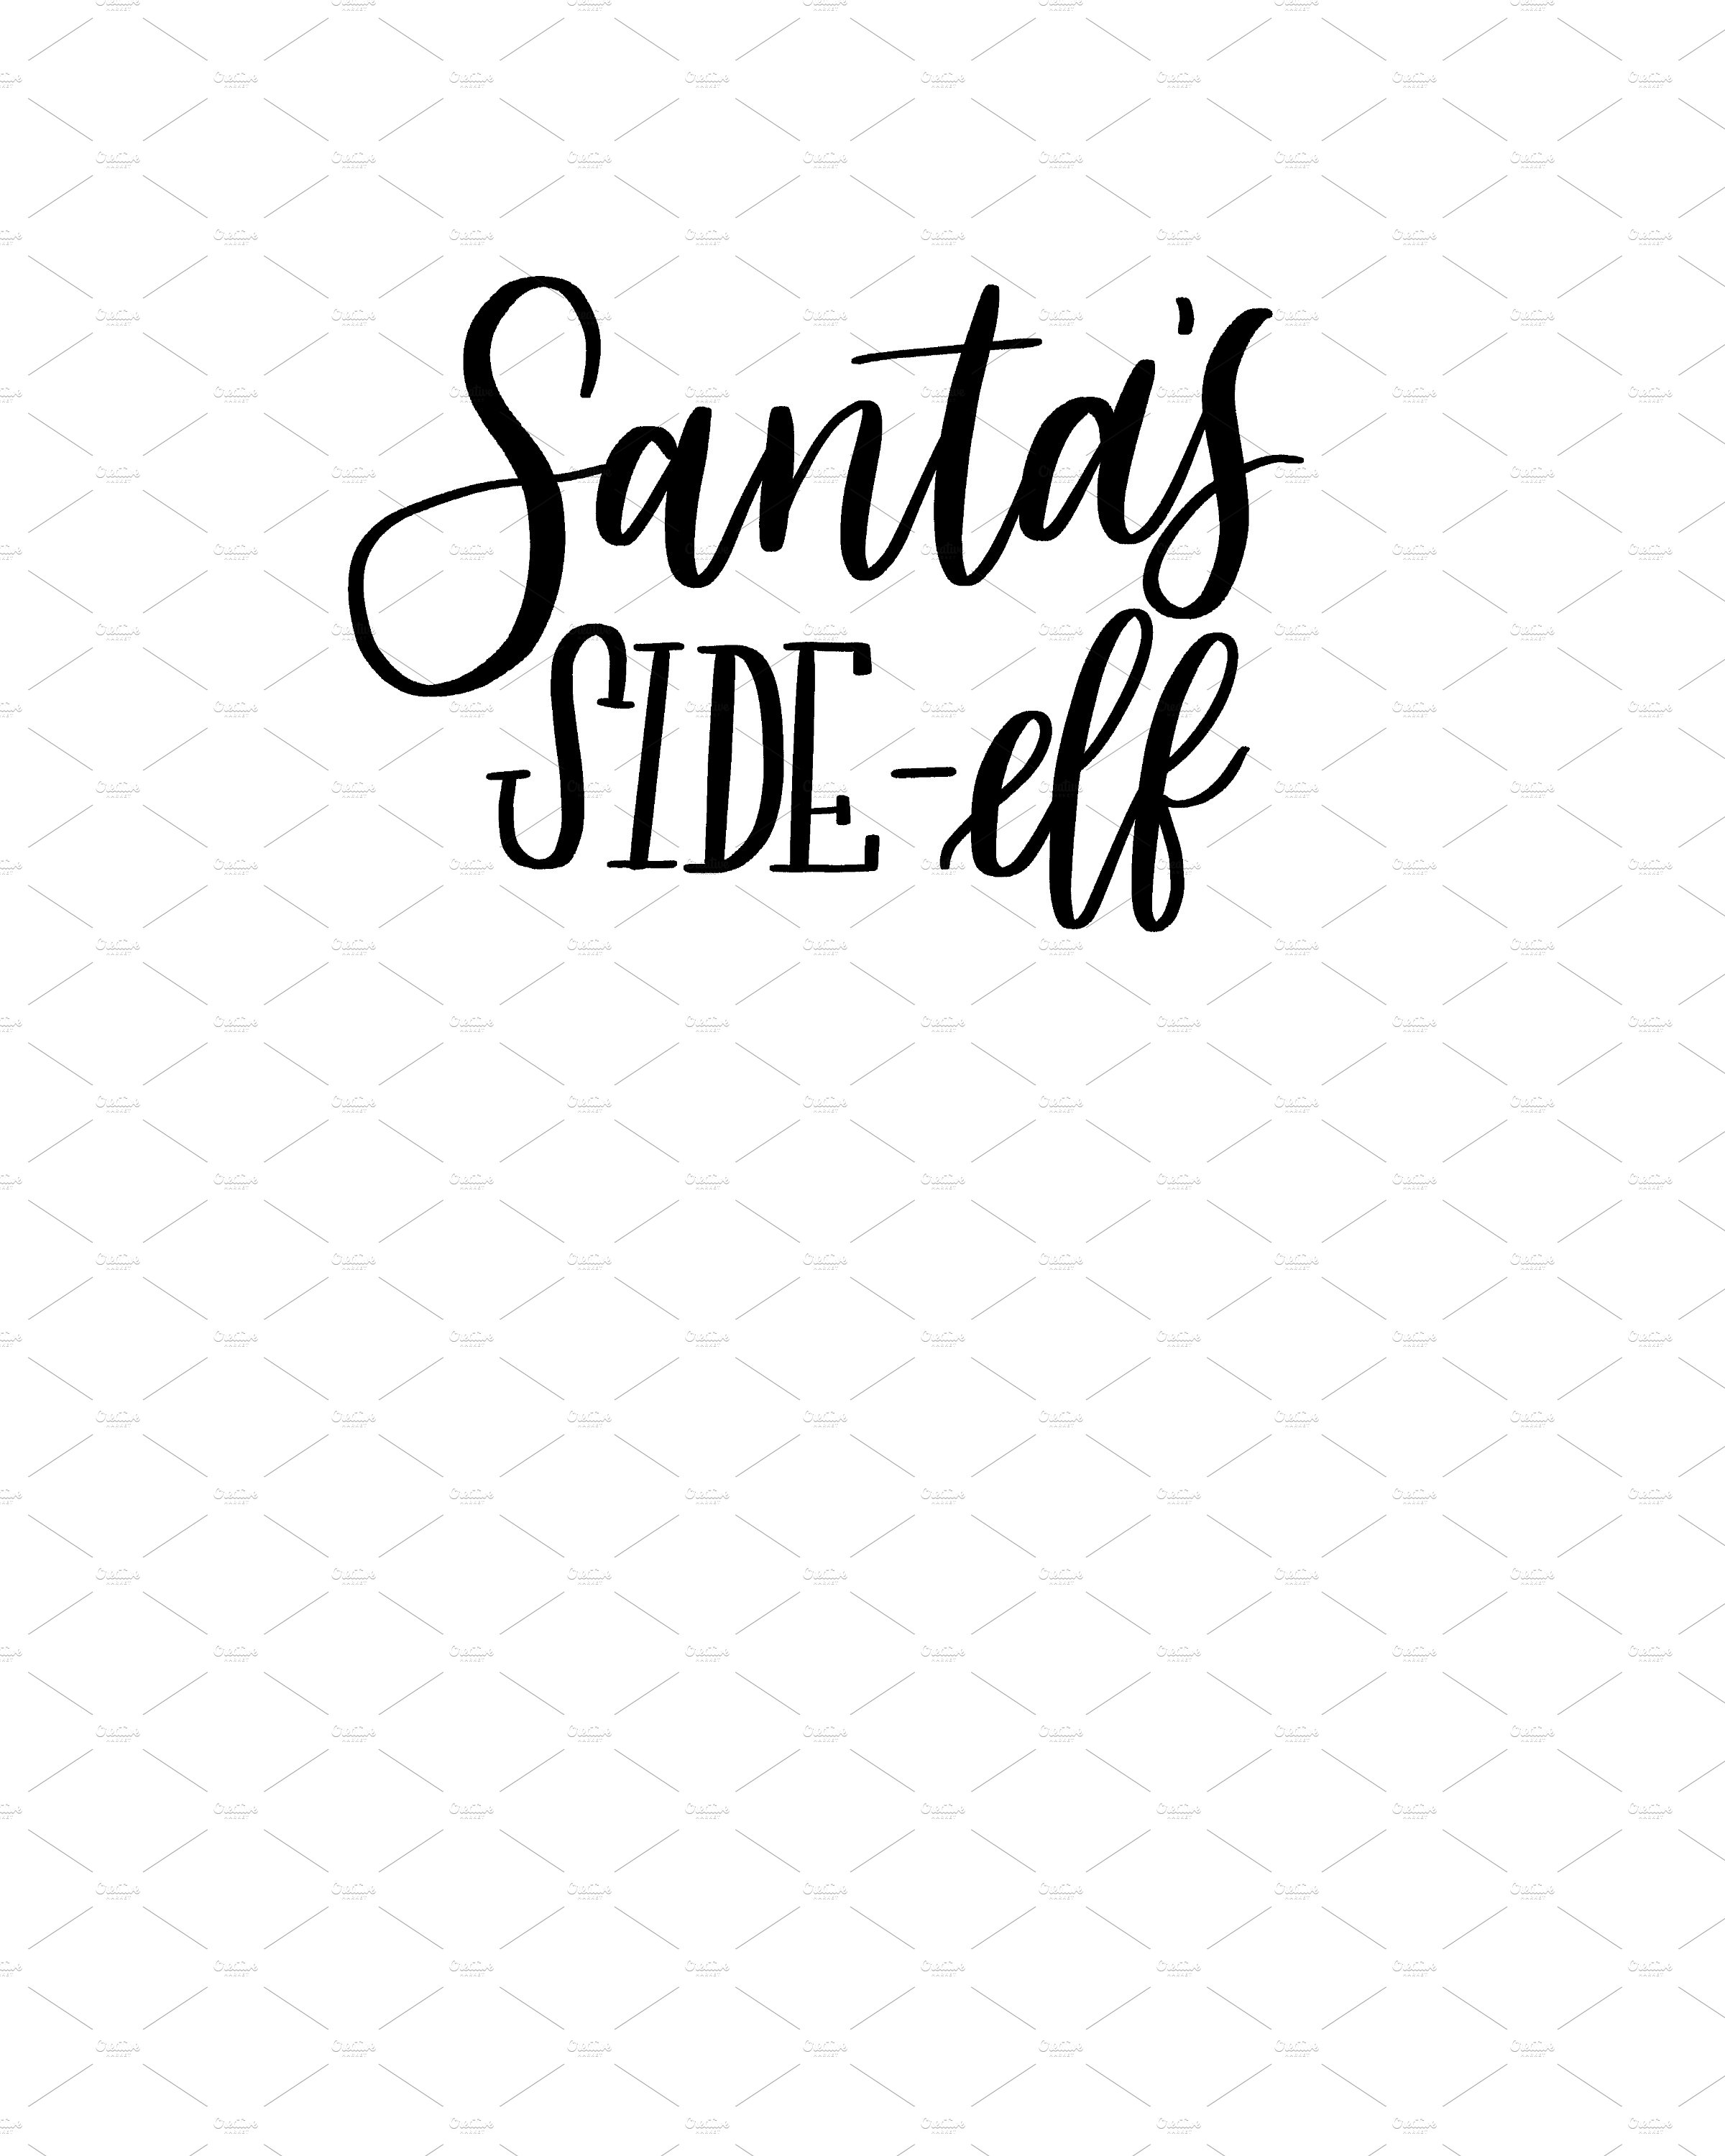 Santa’s Side Elf cut filepreview image.